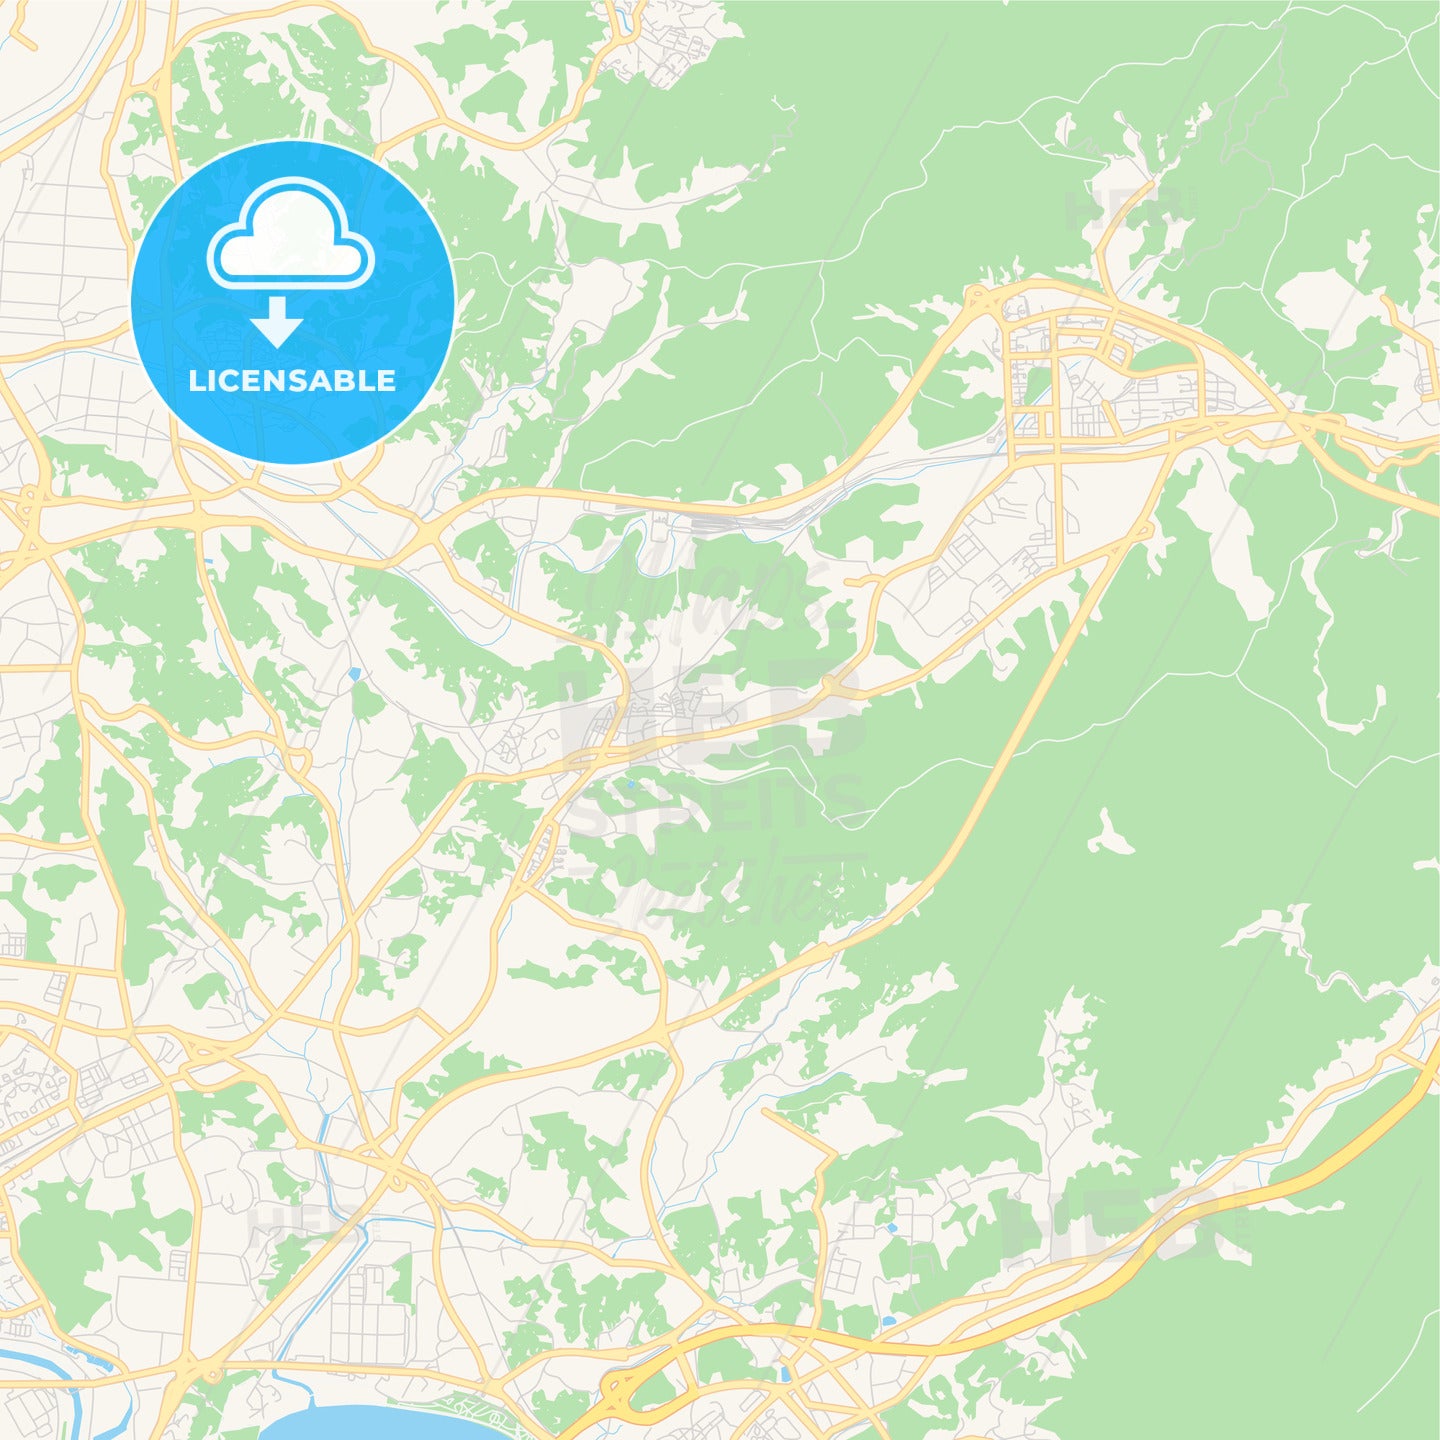 Printable street map of Namyangju, South Korea